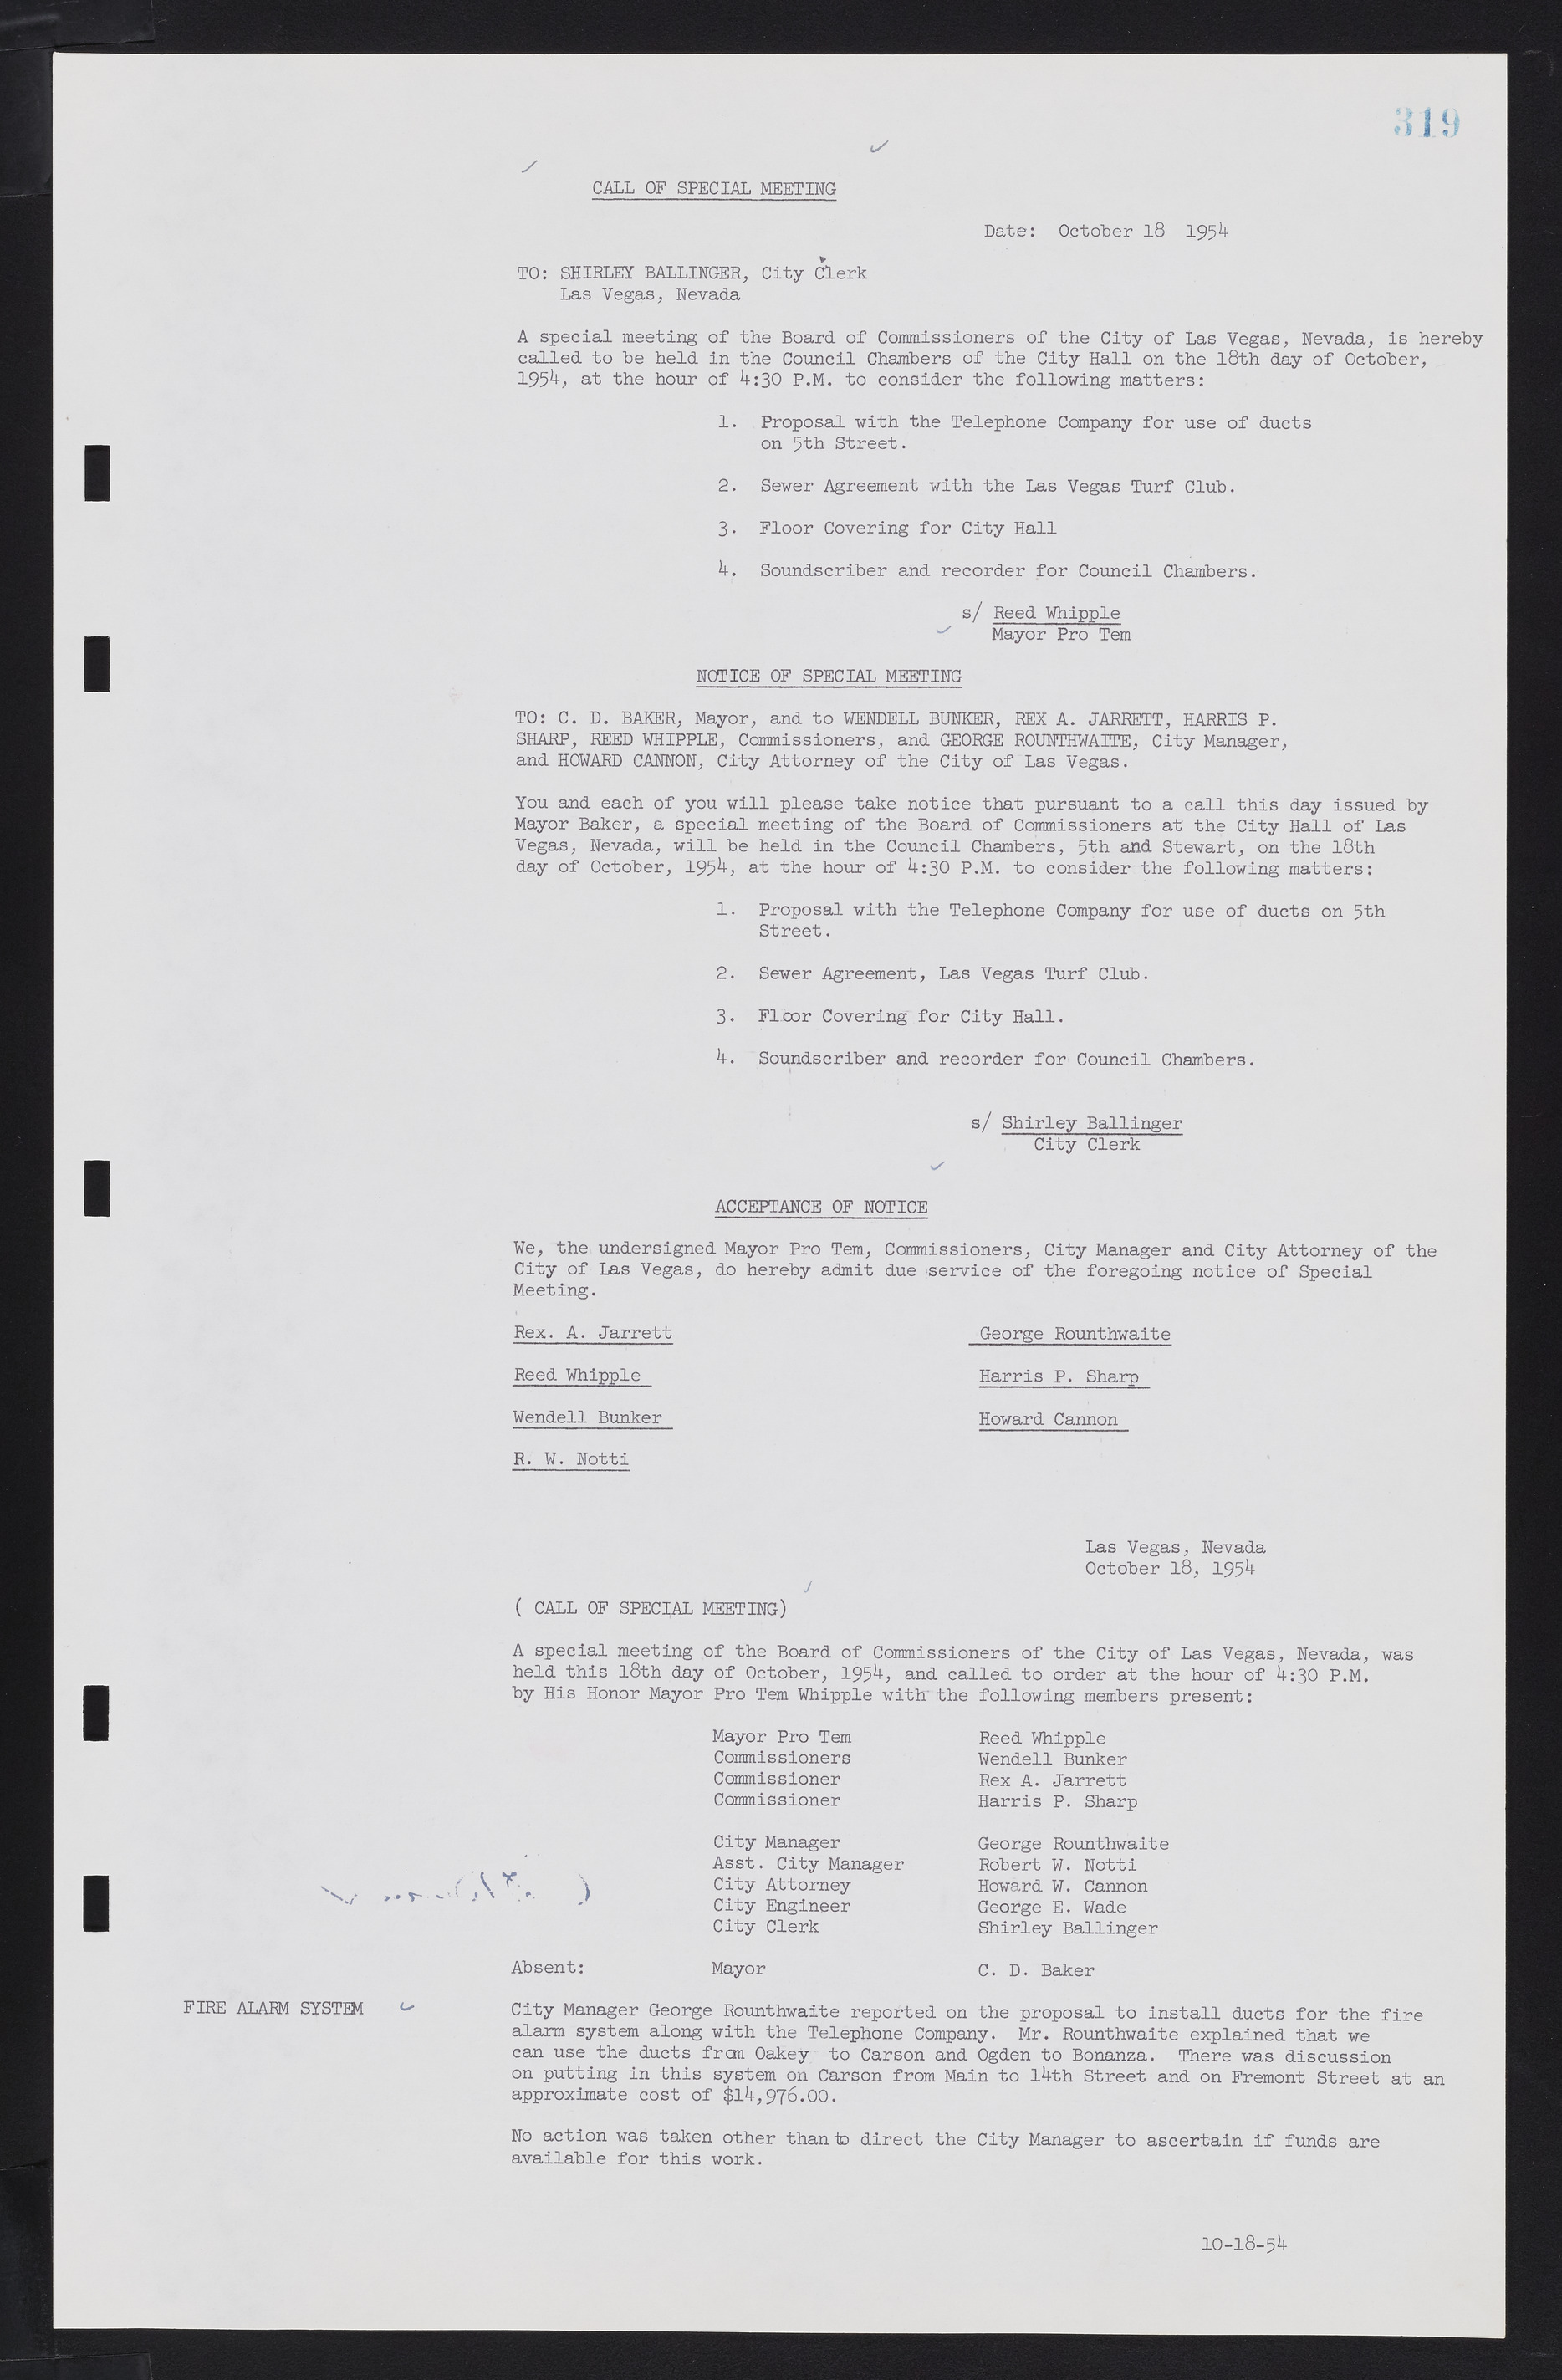 Las Vegas City Commission Minutes, February 17, 1954 to September 21, 1955, lvc000009-325